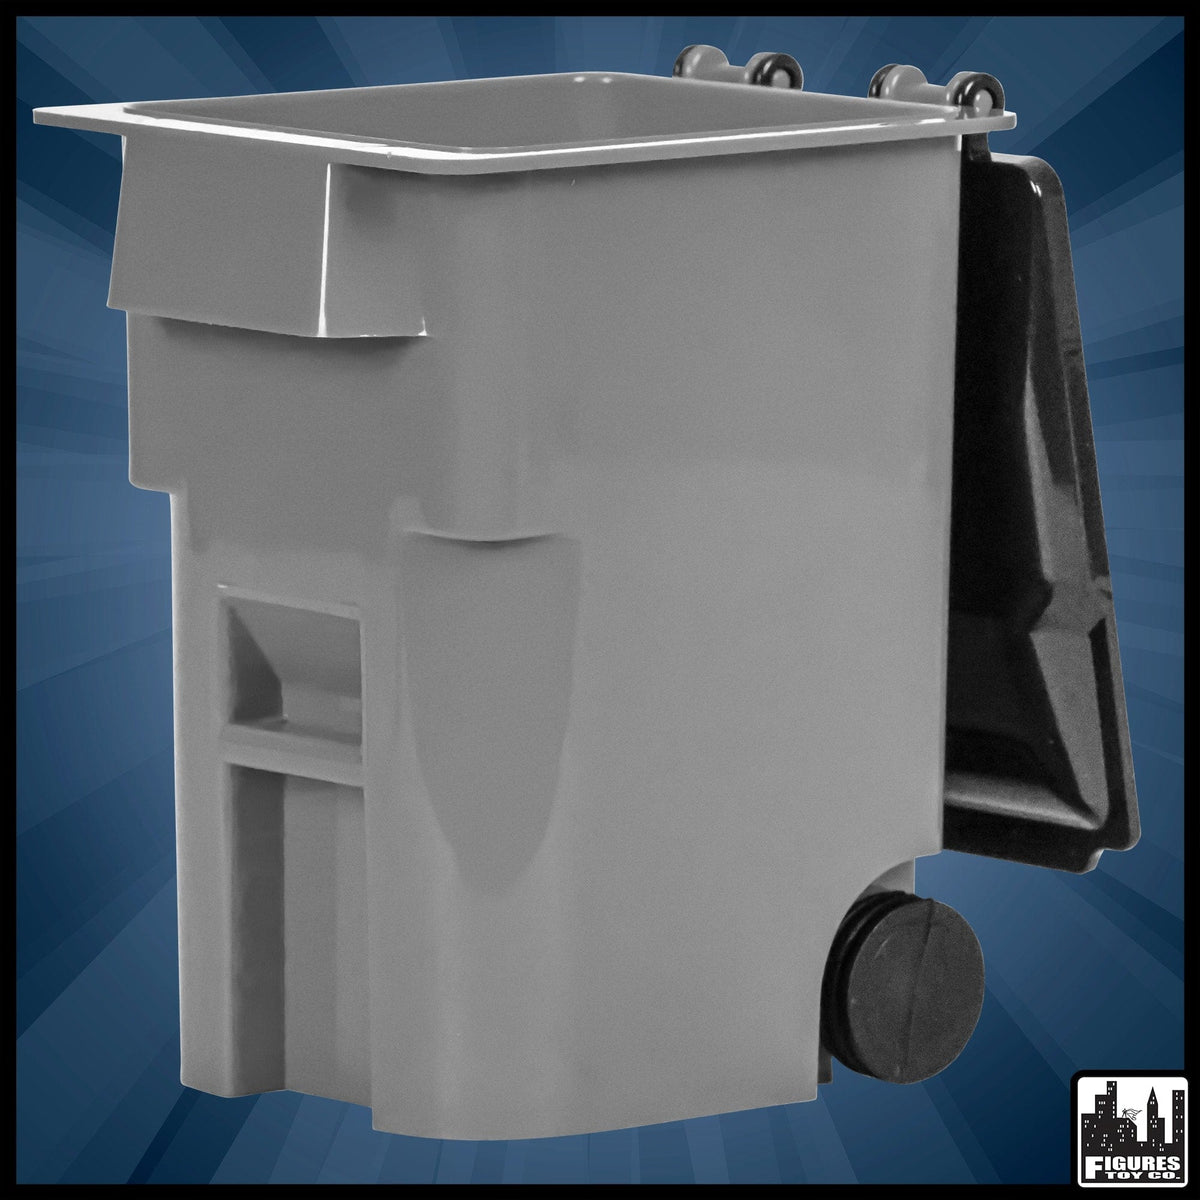 Black Dumpster &amp; 3 Gray Trash Cans With Lid &amp; Wheels for WWE Wrestling Action Figures